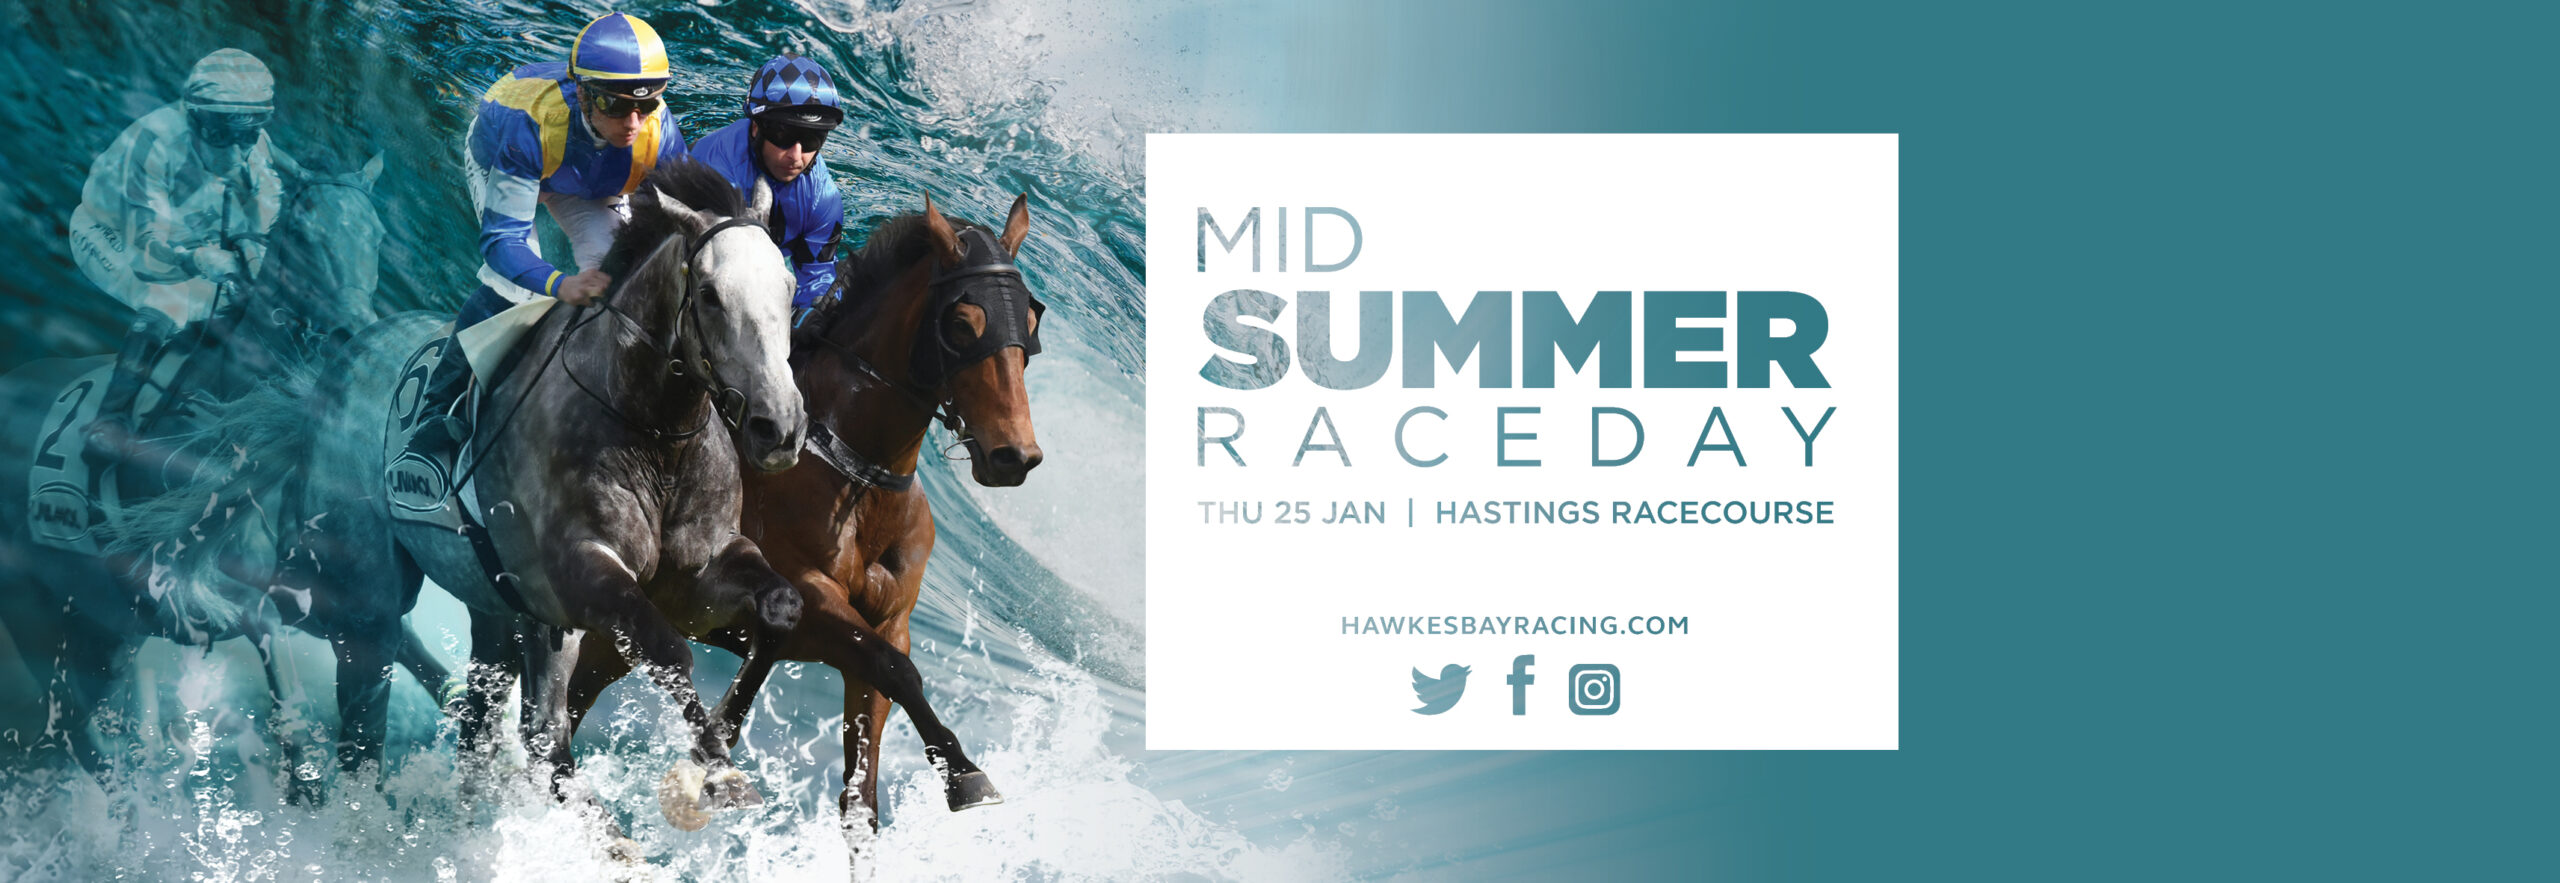 Mid Summer Raceday - Facebook Banner thin